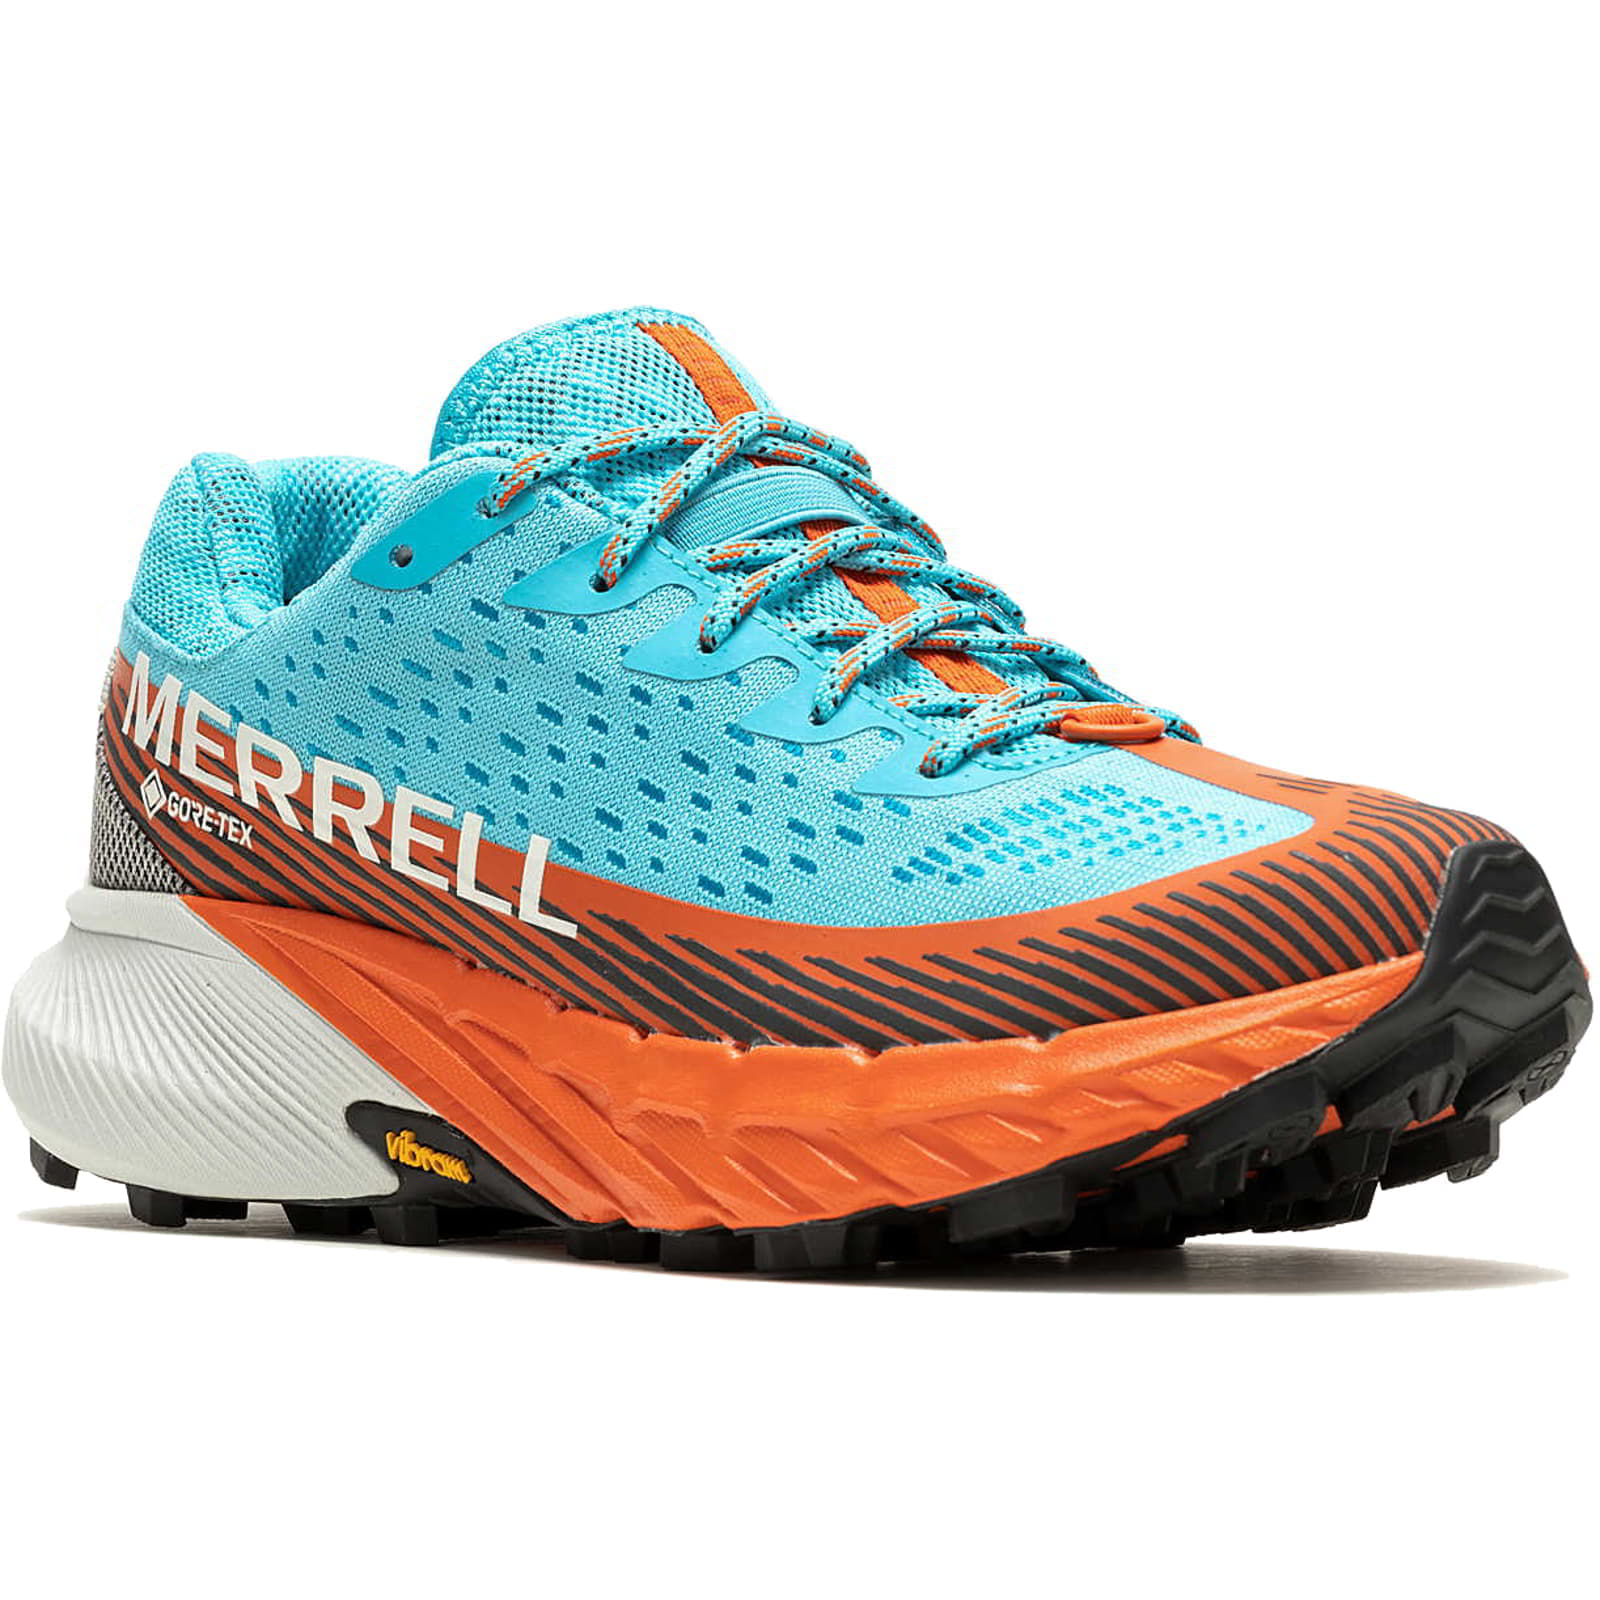 Merrell Women's Agility Peak 5 GTX Waterproof Trail Running Shoes Trainers - UK 7.5